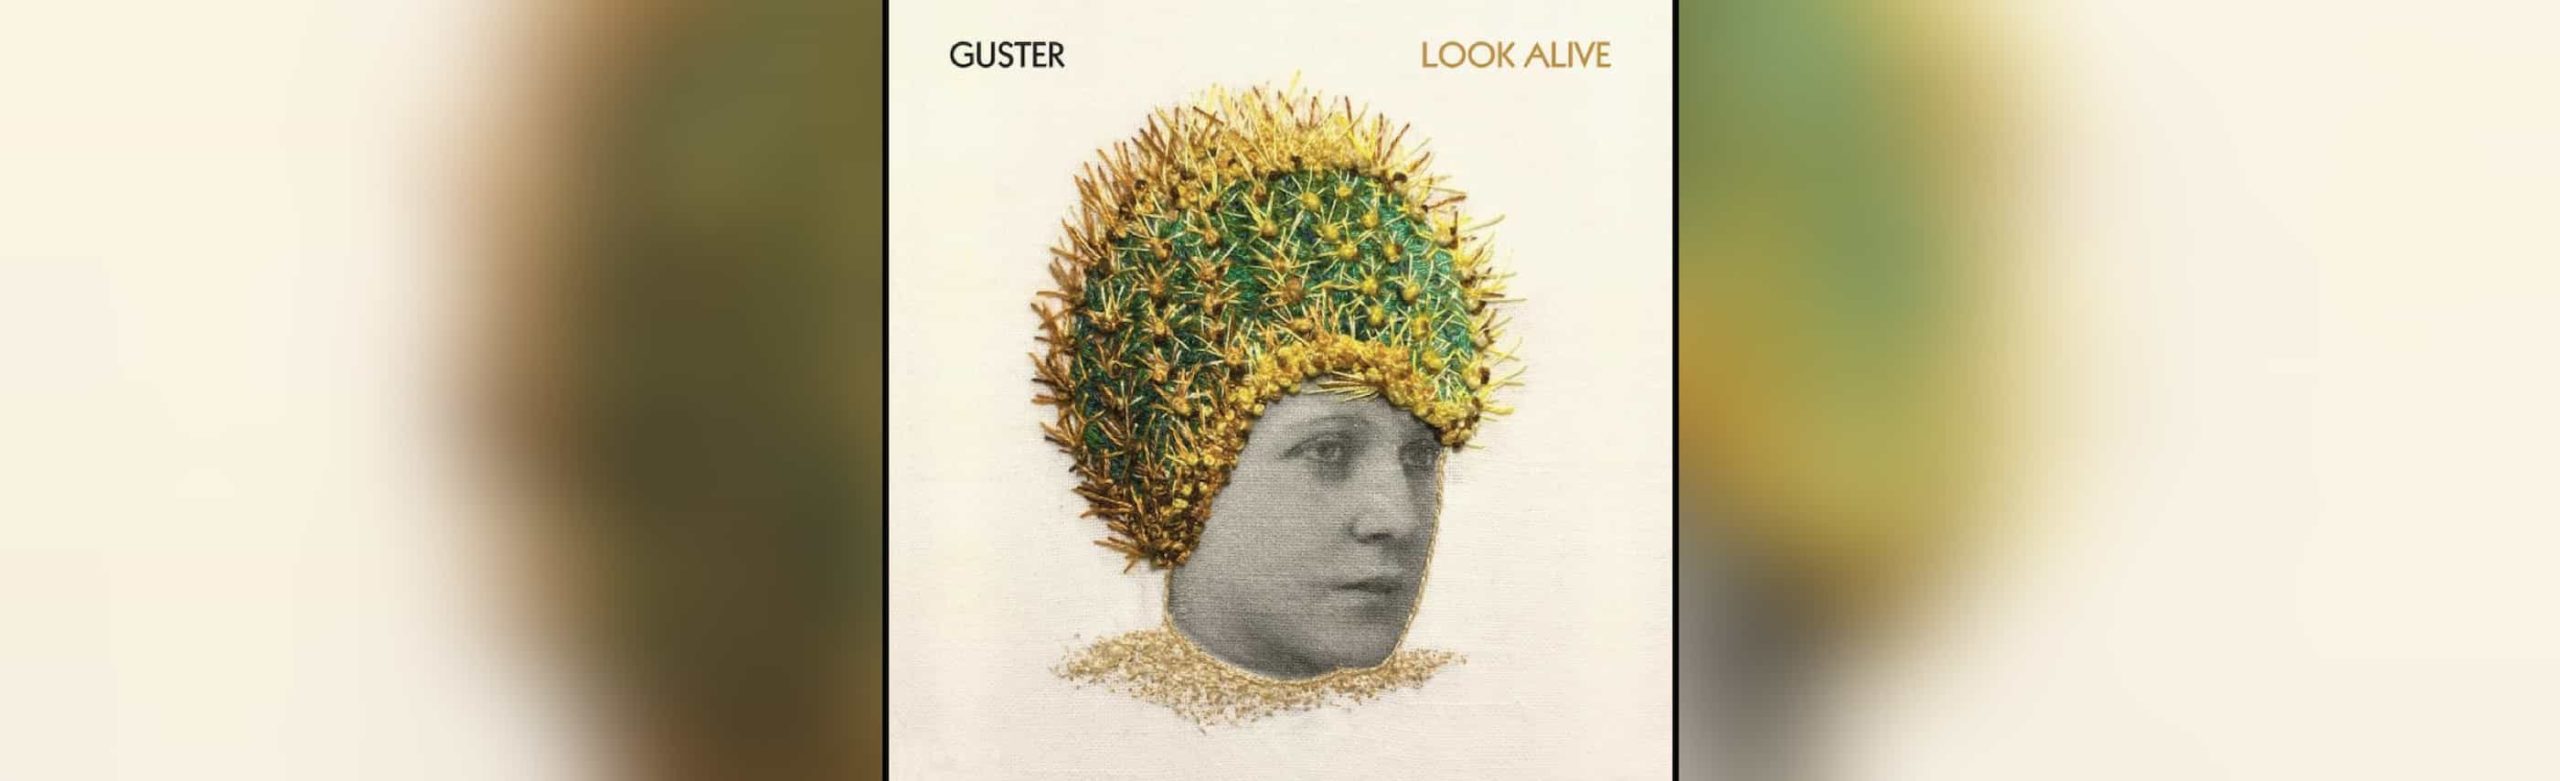 Guster Drops New Album “Look Alive” Ahead of Missoula Concert Image